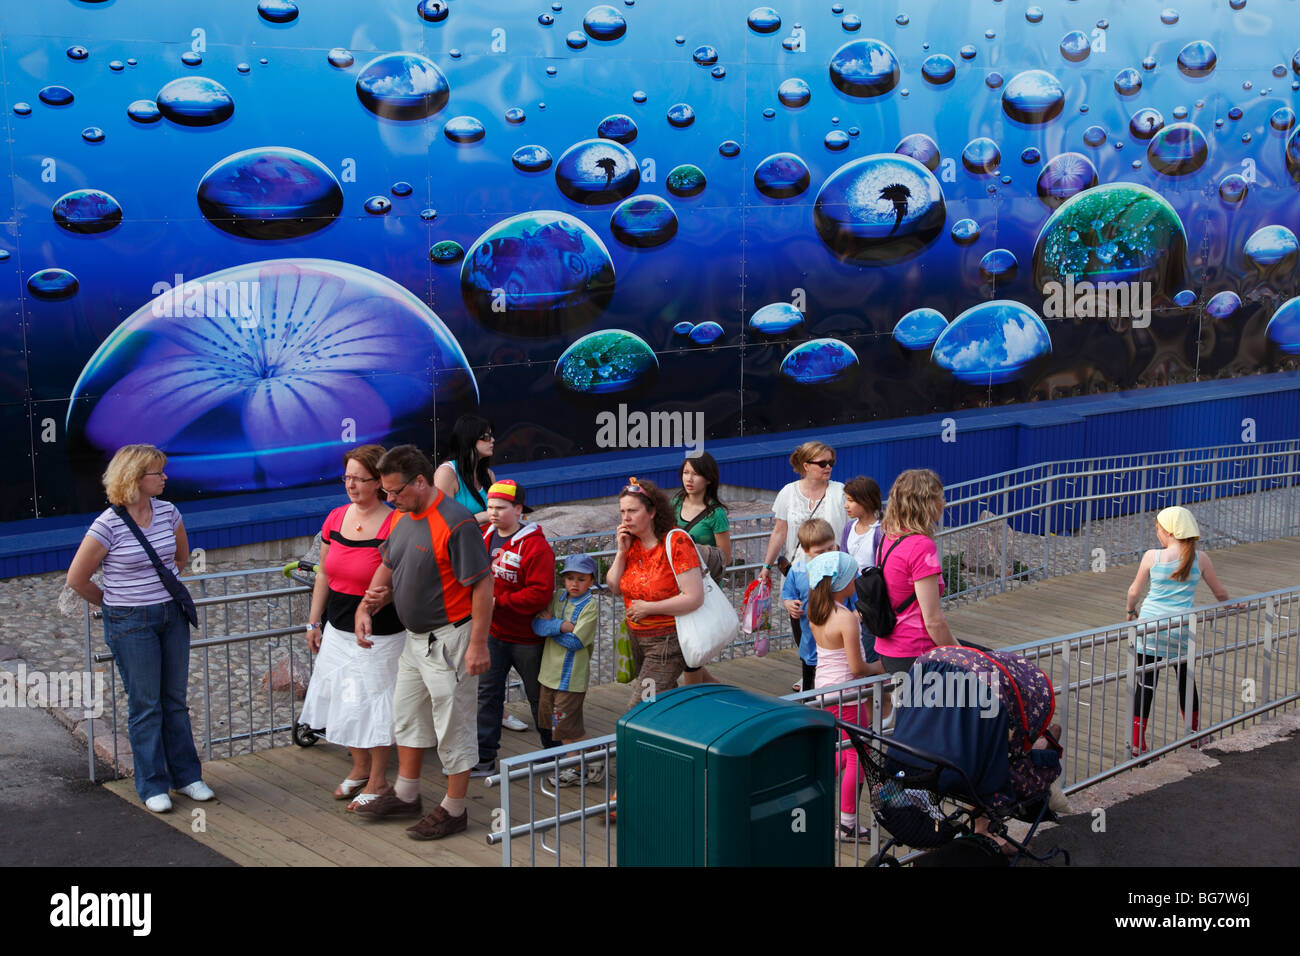 Finland, Helsinki, Helsingfors, Linnanmäki Amusement Park, Wall Mural with Underwater Theme Stock Photo